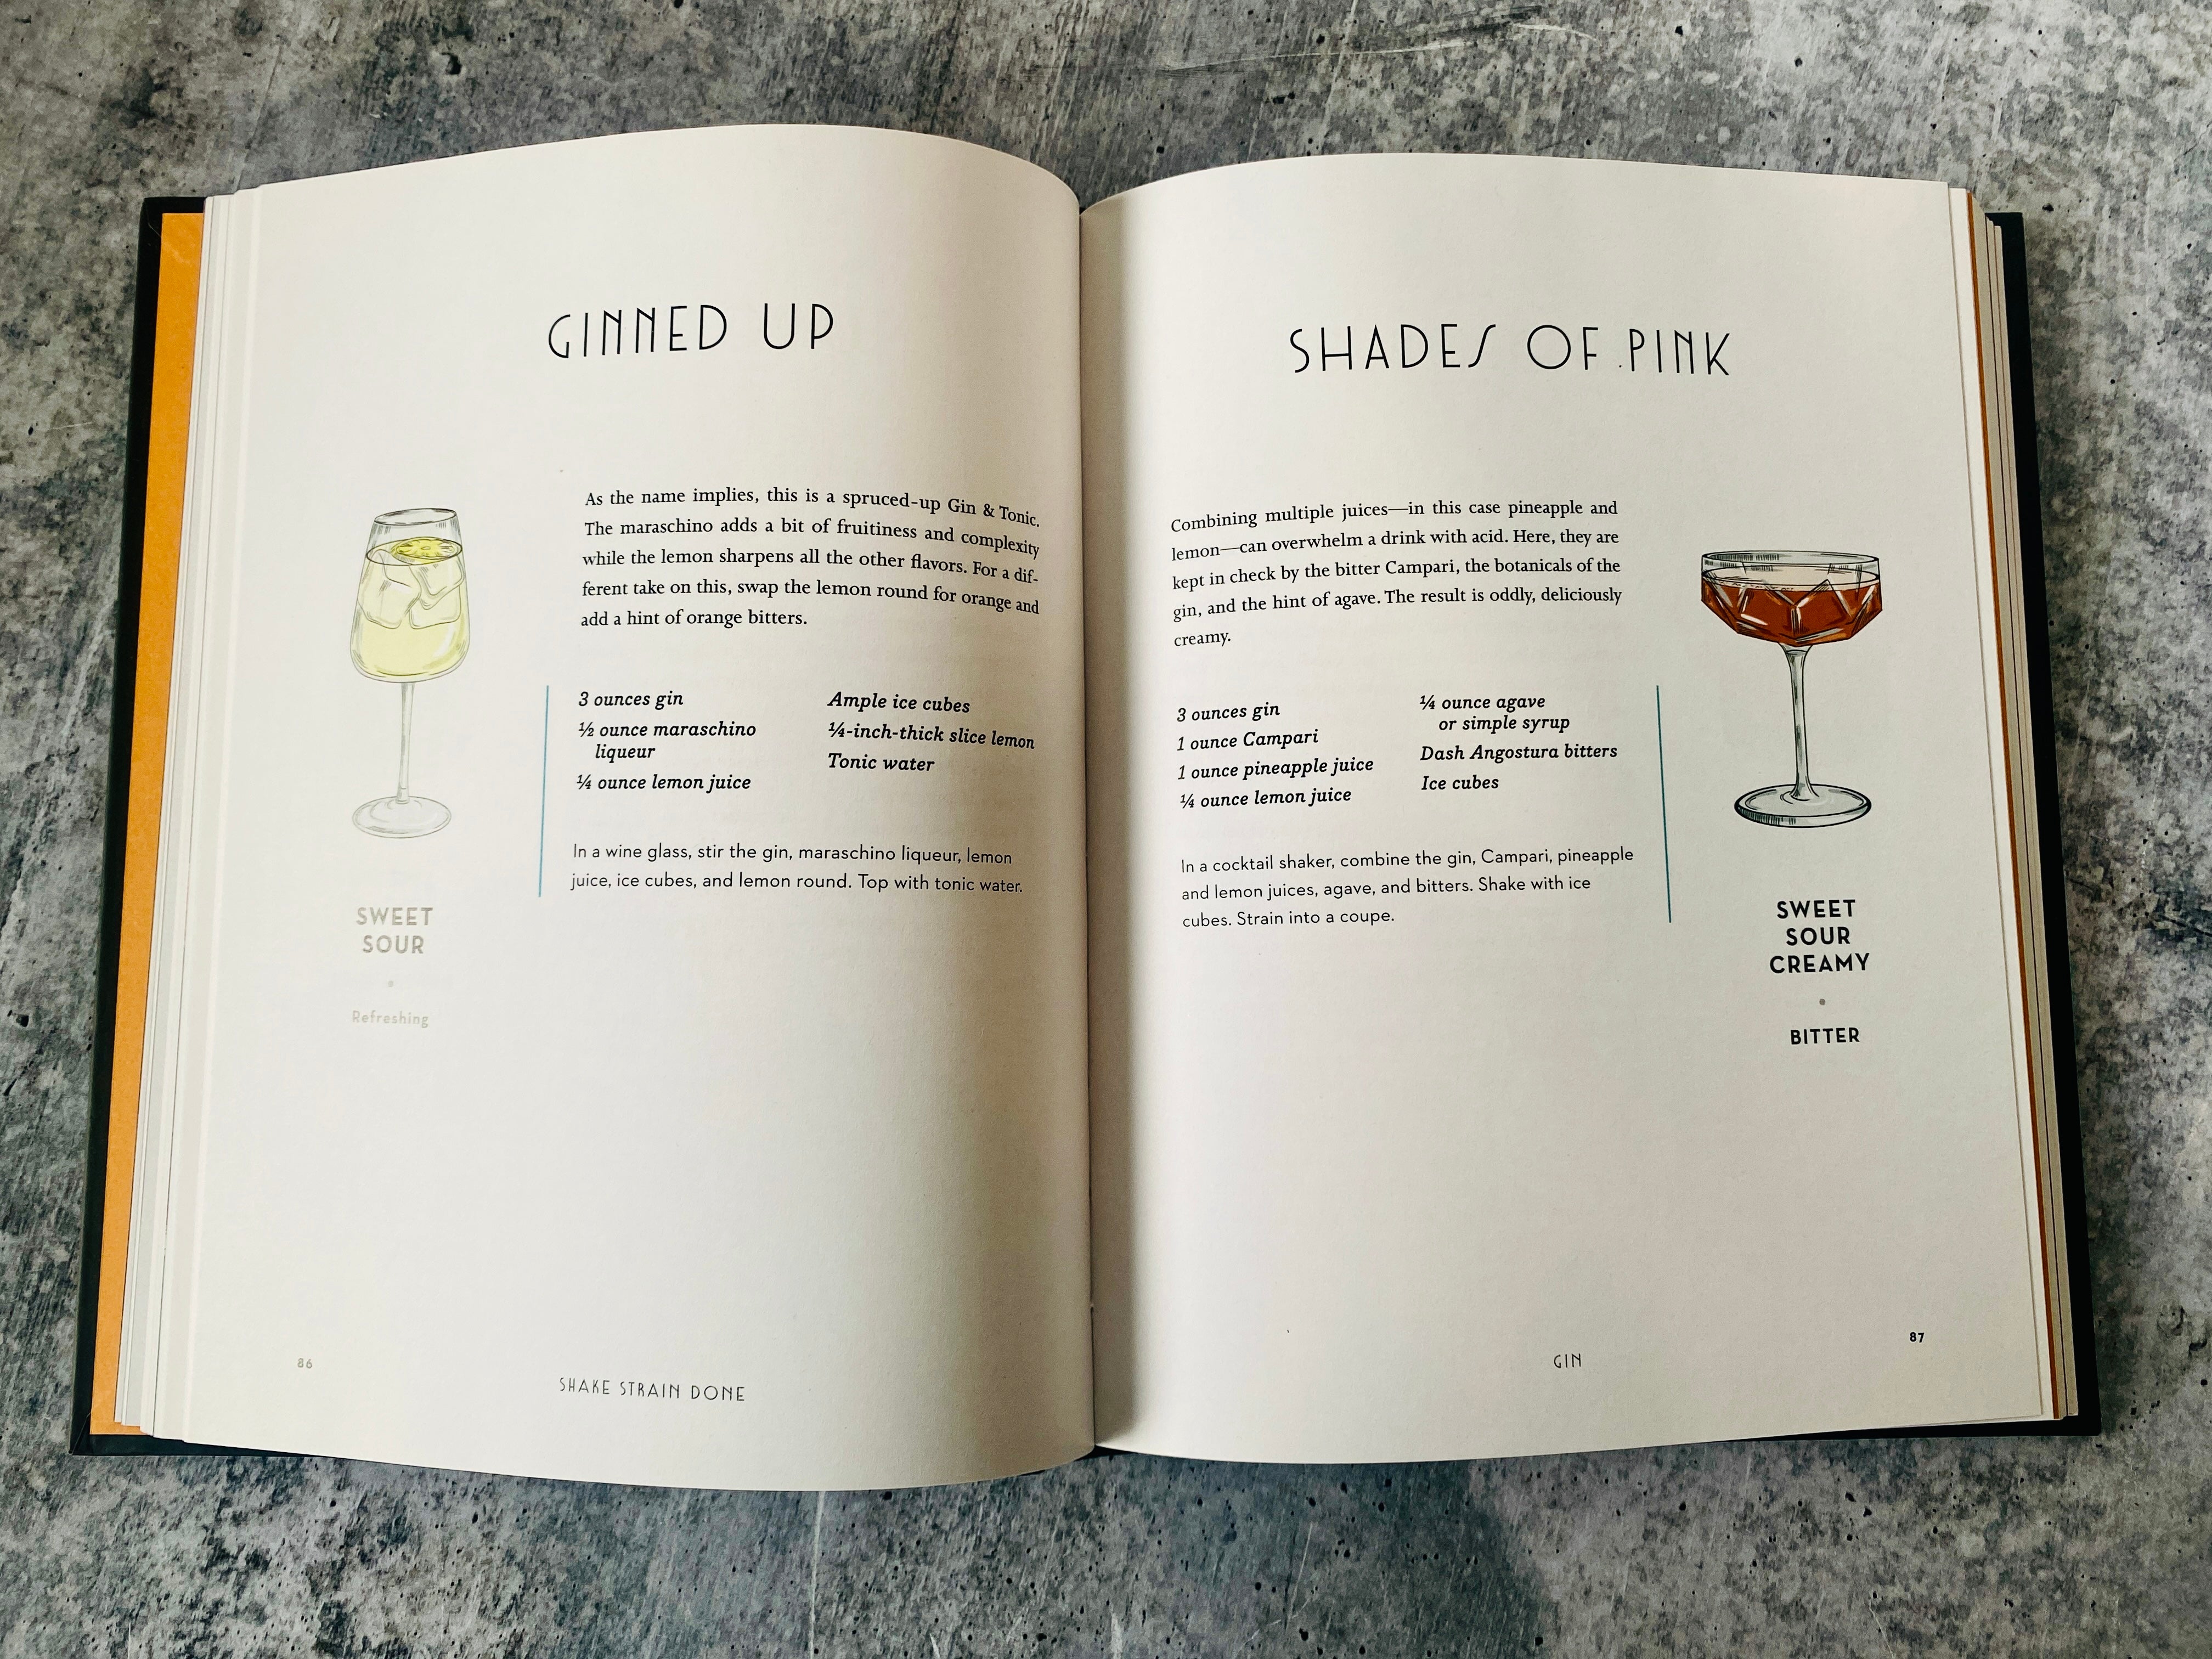 Shake Strain Done Craft Cocktail Book